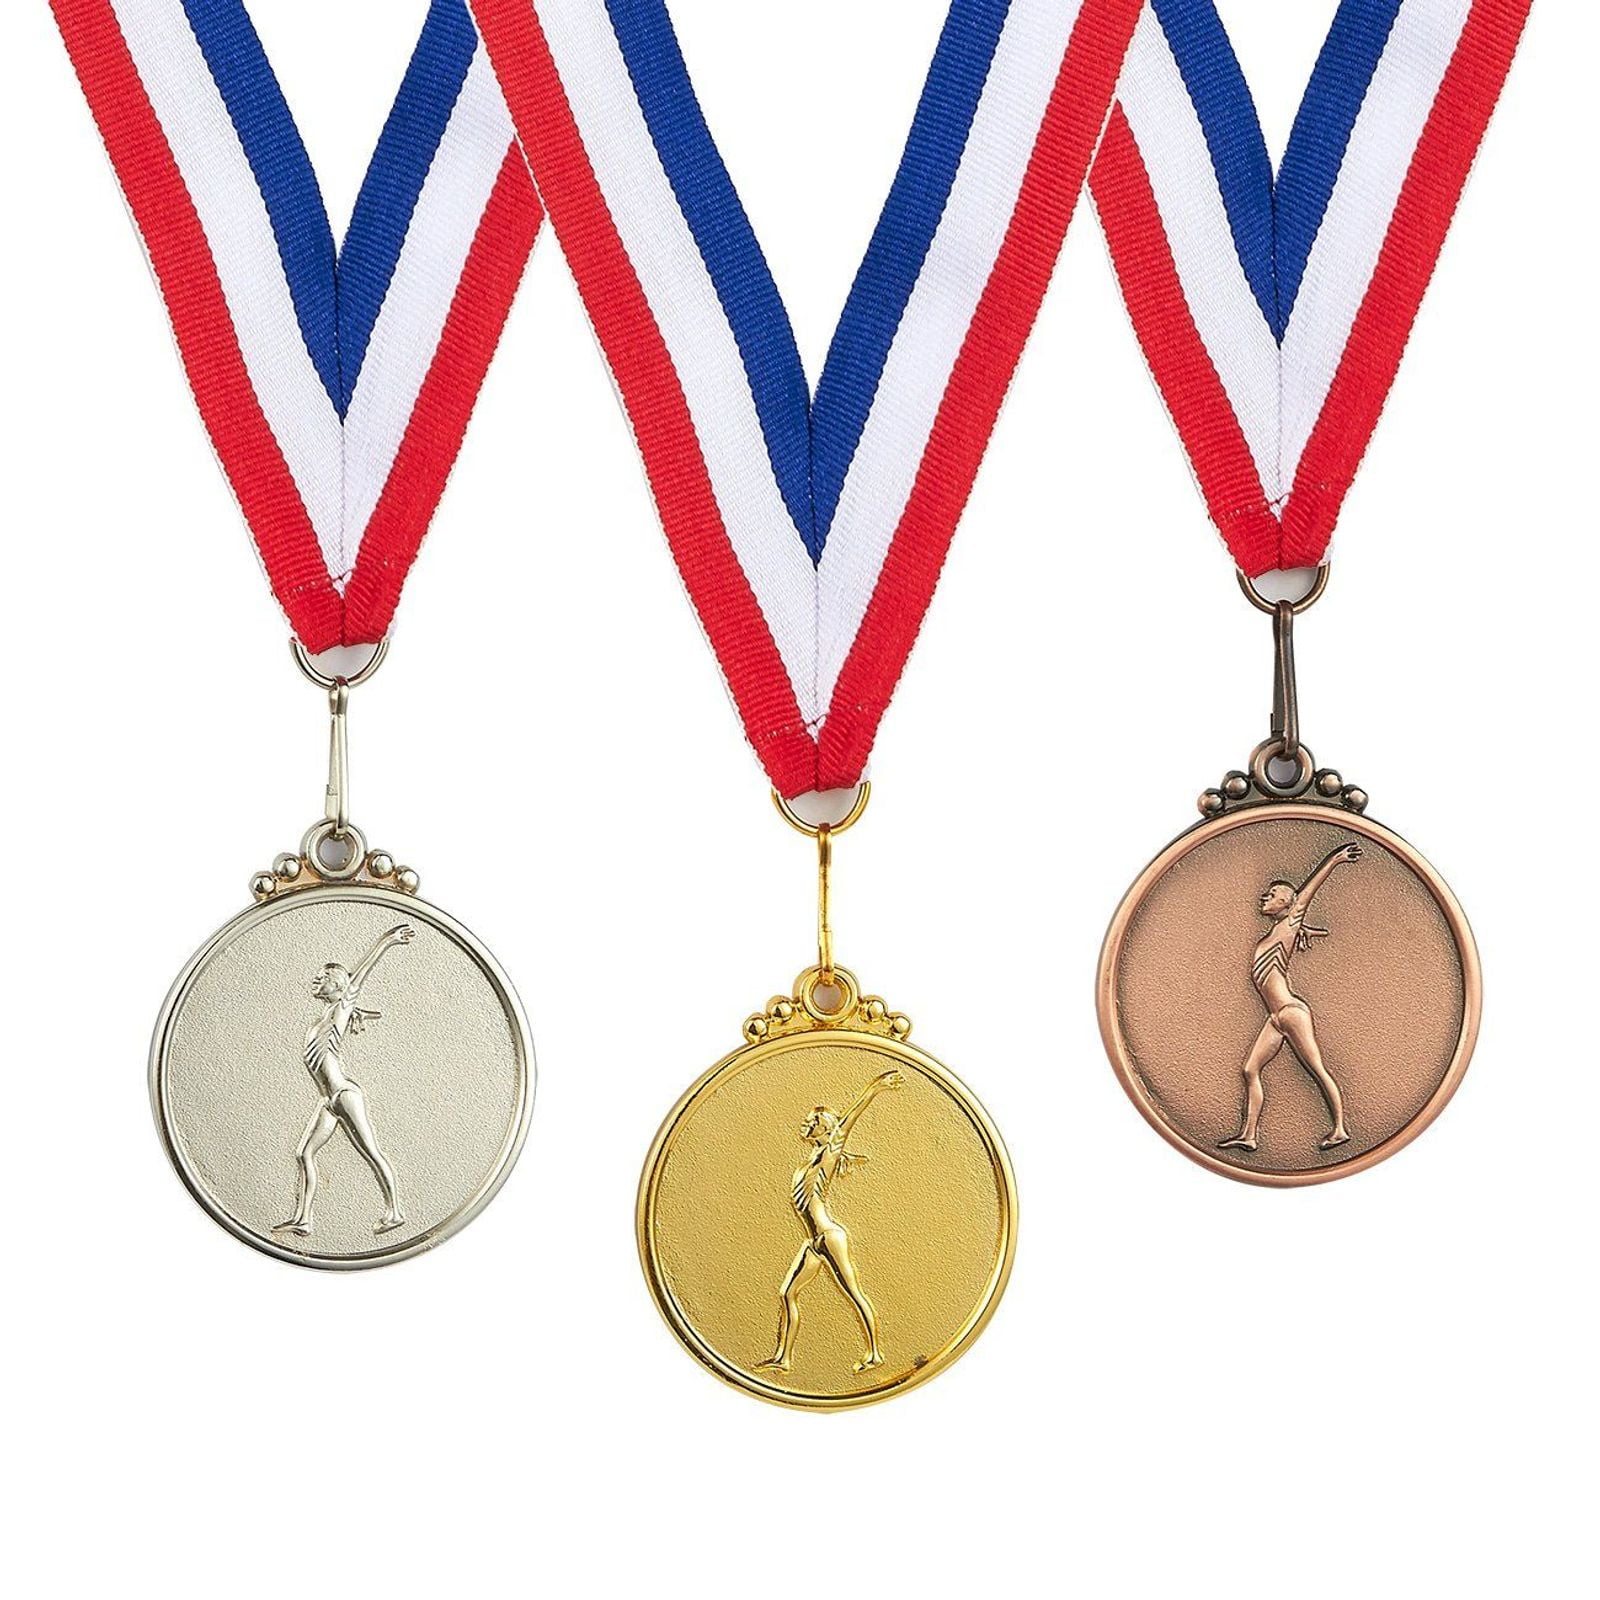 Medals Packs 10 Gymnastics Medals & Ribbons Athletes Floor Apparatus 25 50 